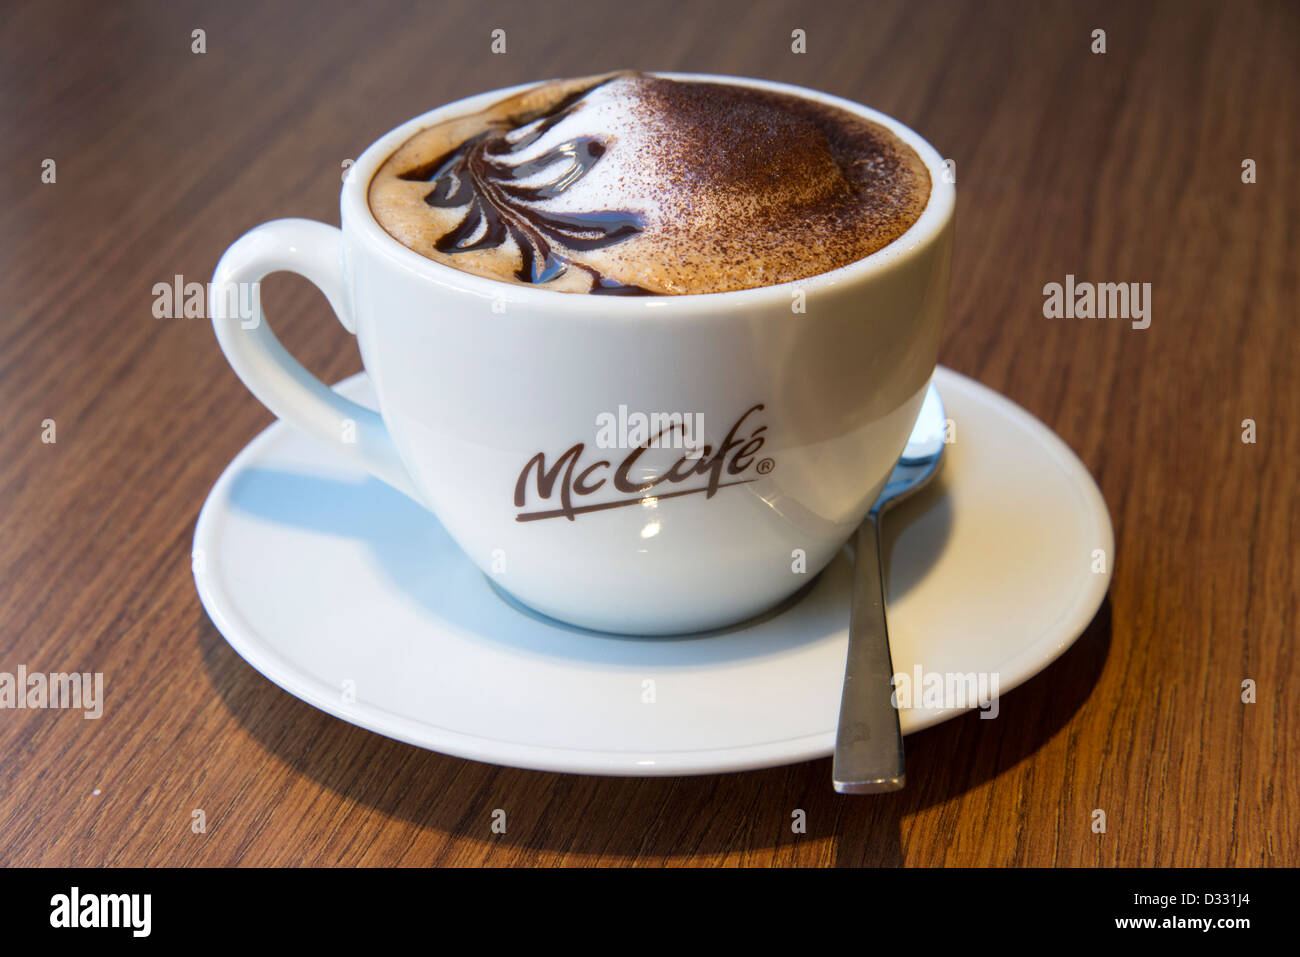 Tazza di caffè cappuccino in un McDonald's McCafe Foto stock - Alamy